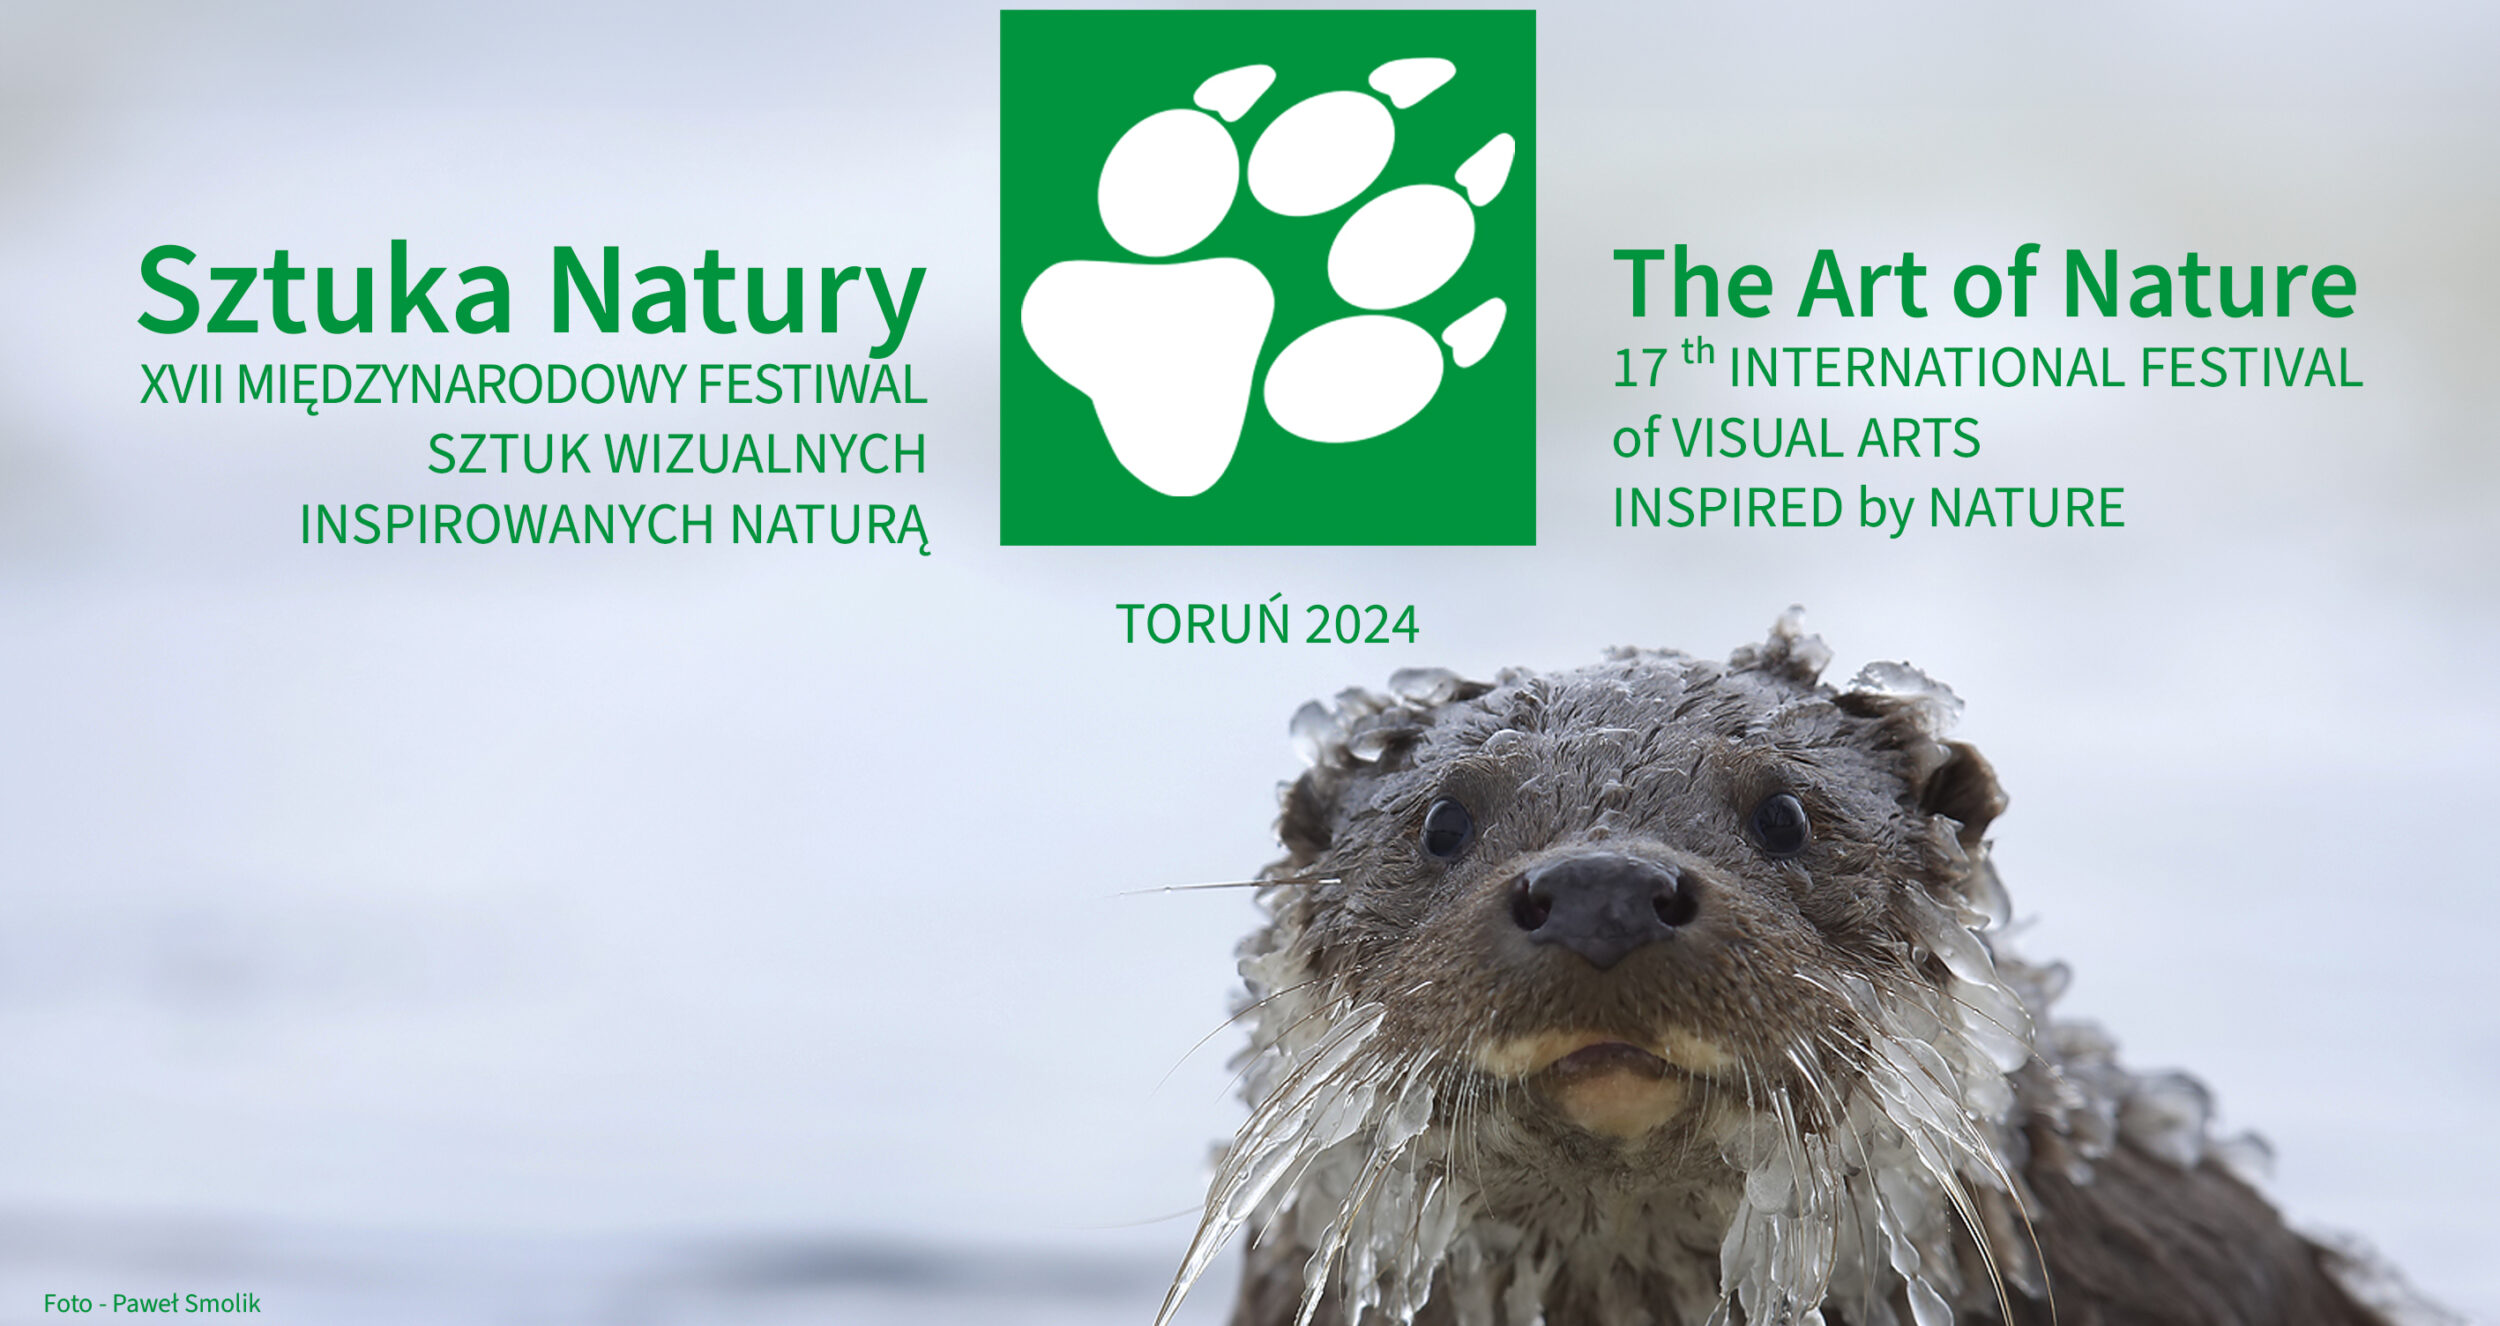 "Sztuka Natury", XVII Międzynarodowy Festiwal Sztuk Wizualnych Inspirowanych Naturą Toruń 2024 / The "Art of Nature" 17th International Festival of Visual Arts Inspired by Nature Torun 2024